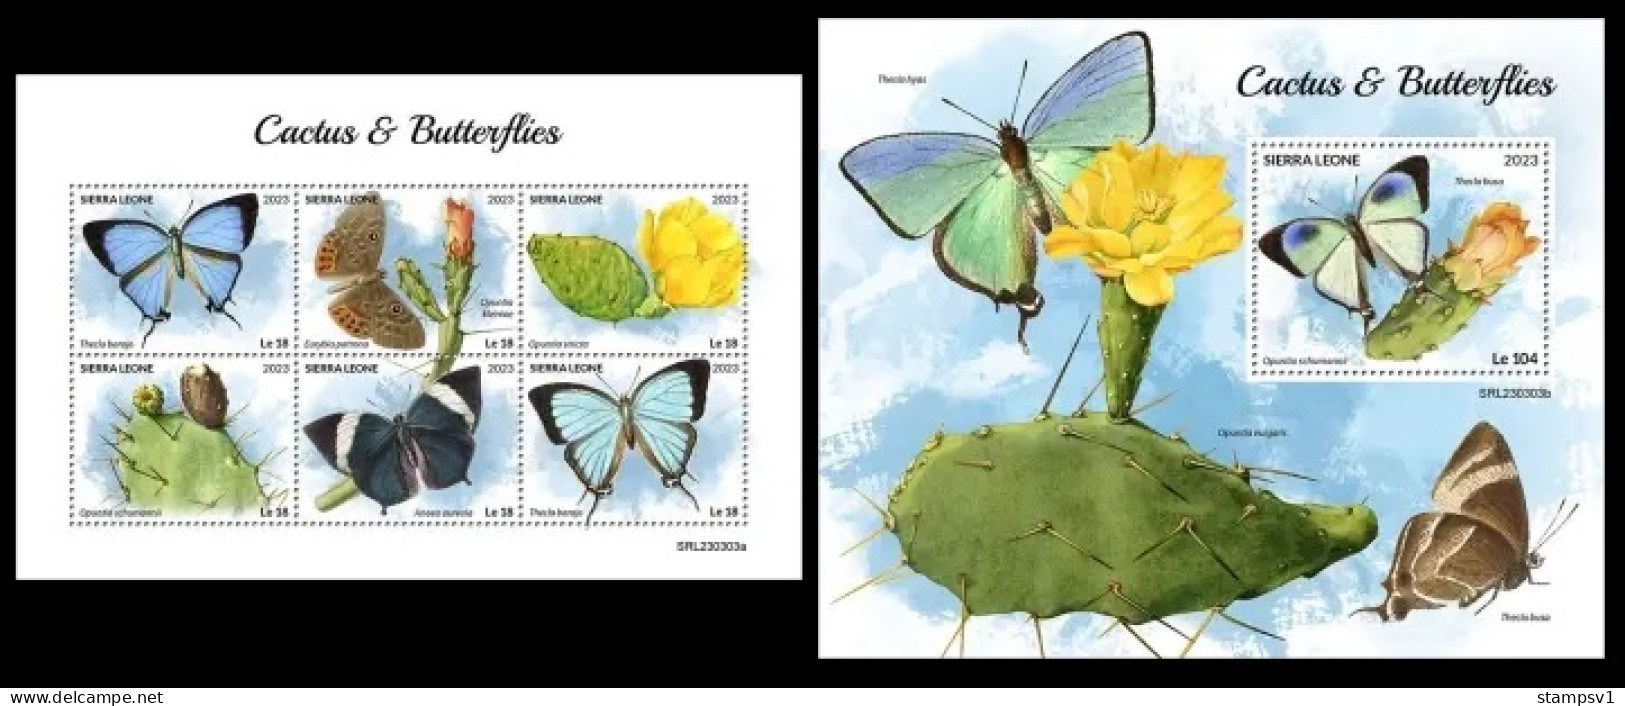 Sierra Leone  2023 Cactus & Butterflies. (303) OFFICIAL ISSUE - Cactus